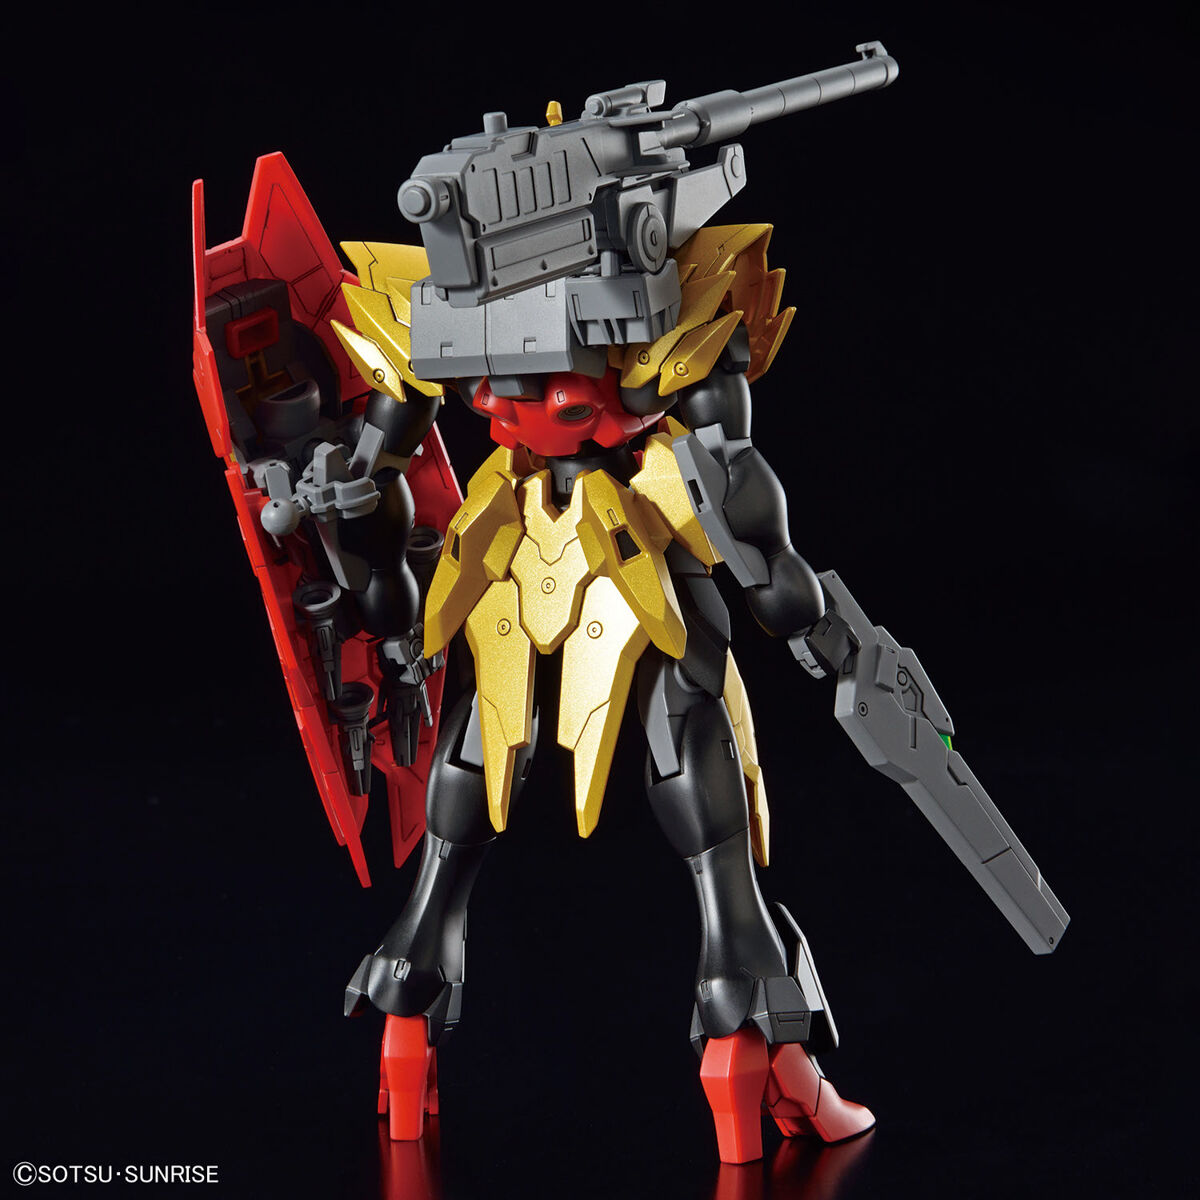 Bandai 2692441 1:144 HG Gundam Build Metaverse Typhoeus Gundam Chimera Kit